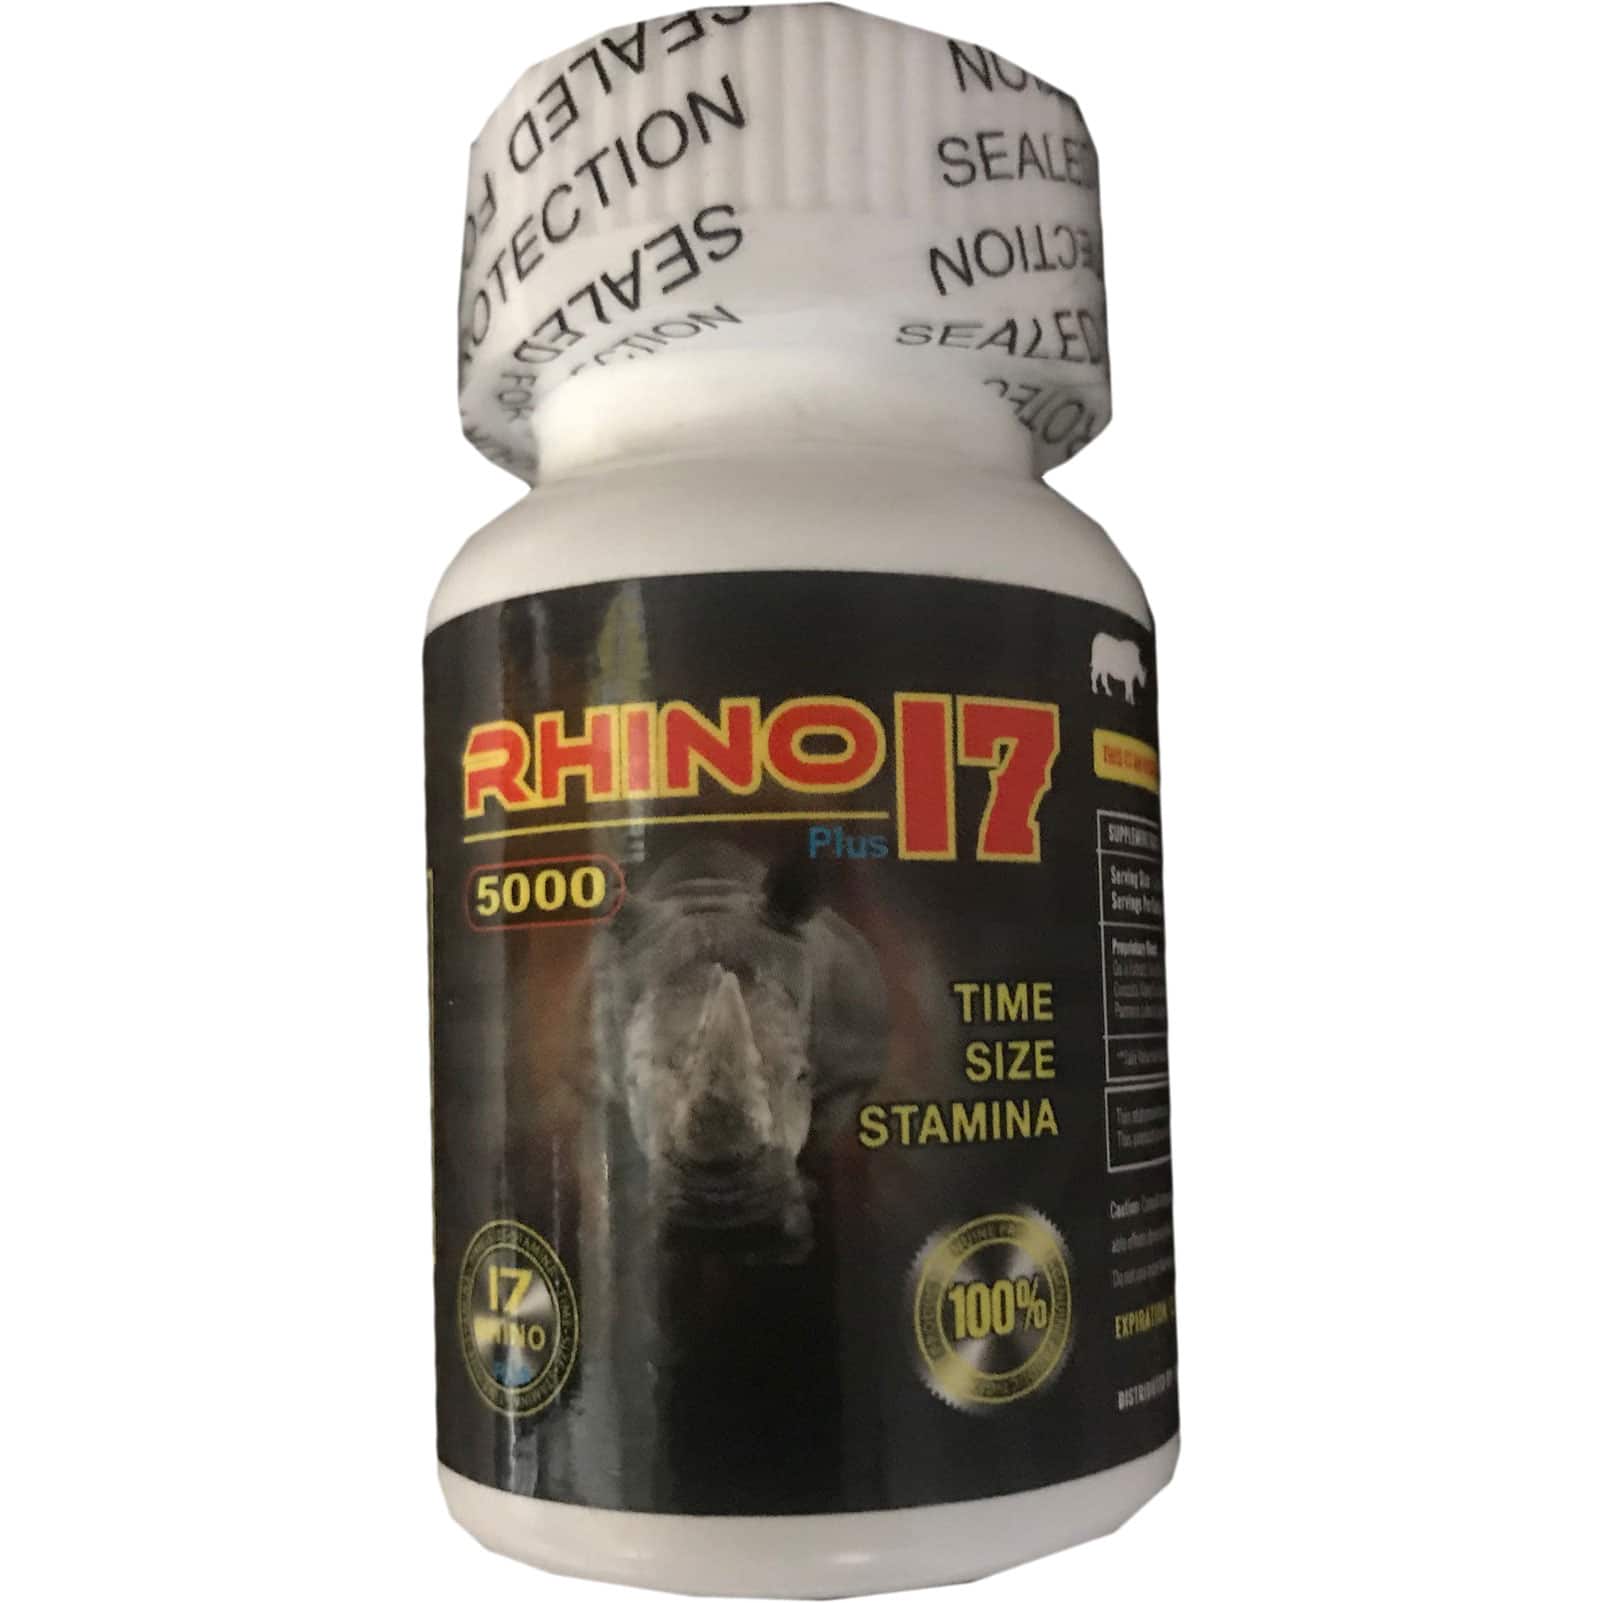 Rhino 17 5000 Plus Men Sexual Supplement Enhancement Pills Bottle